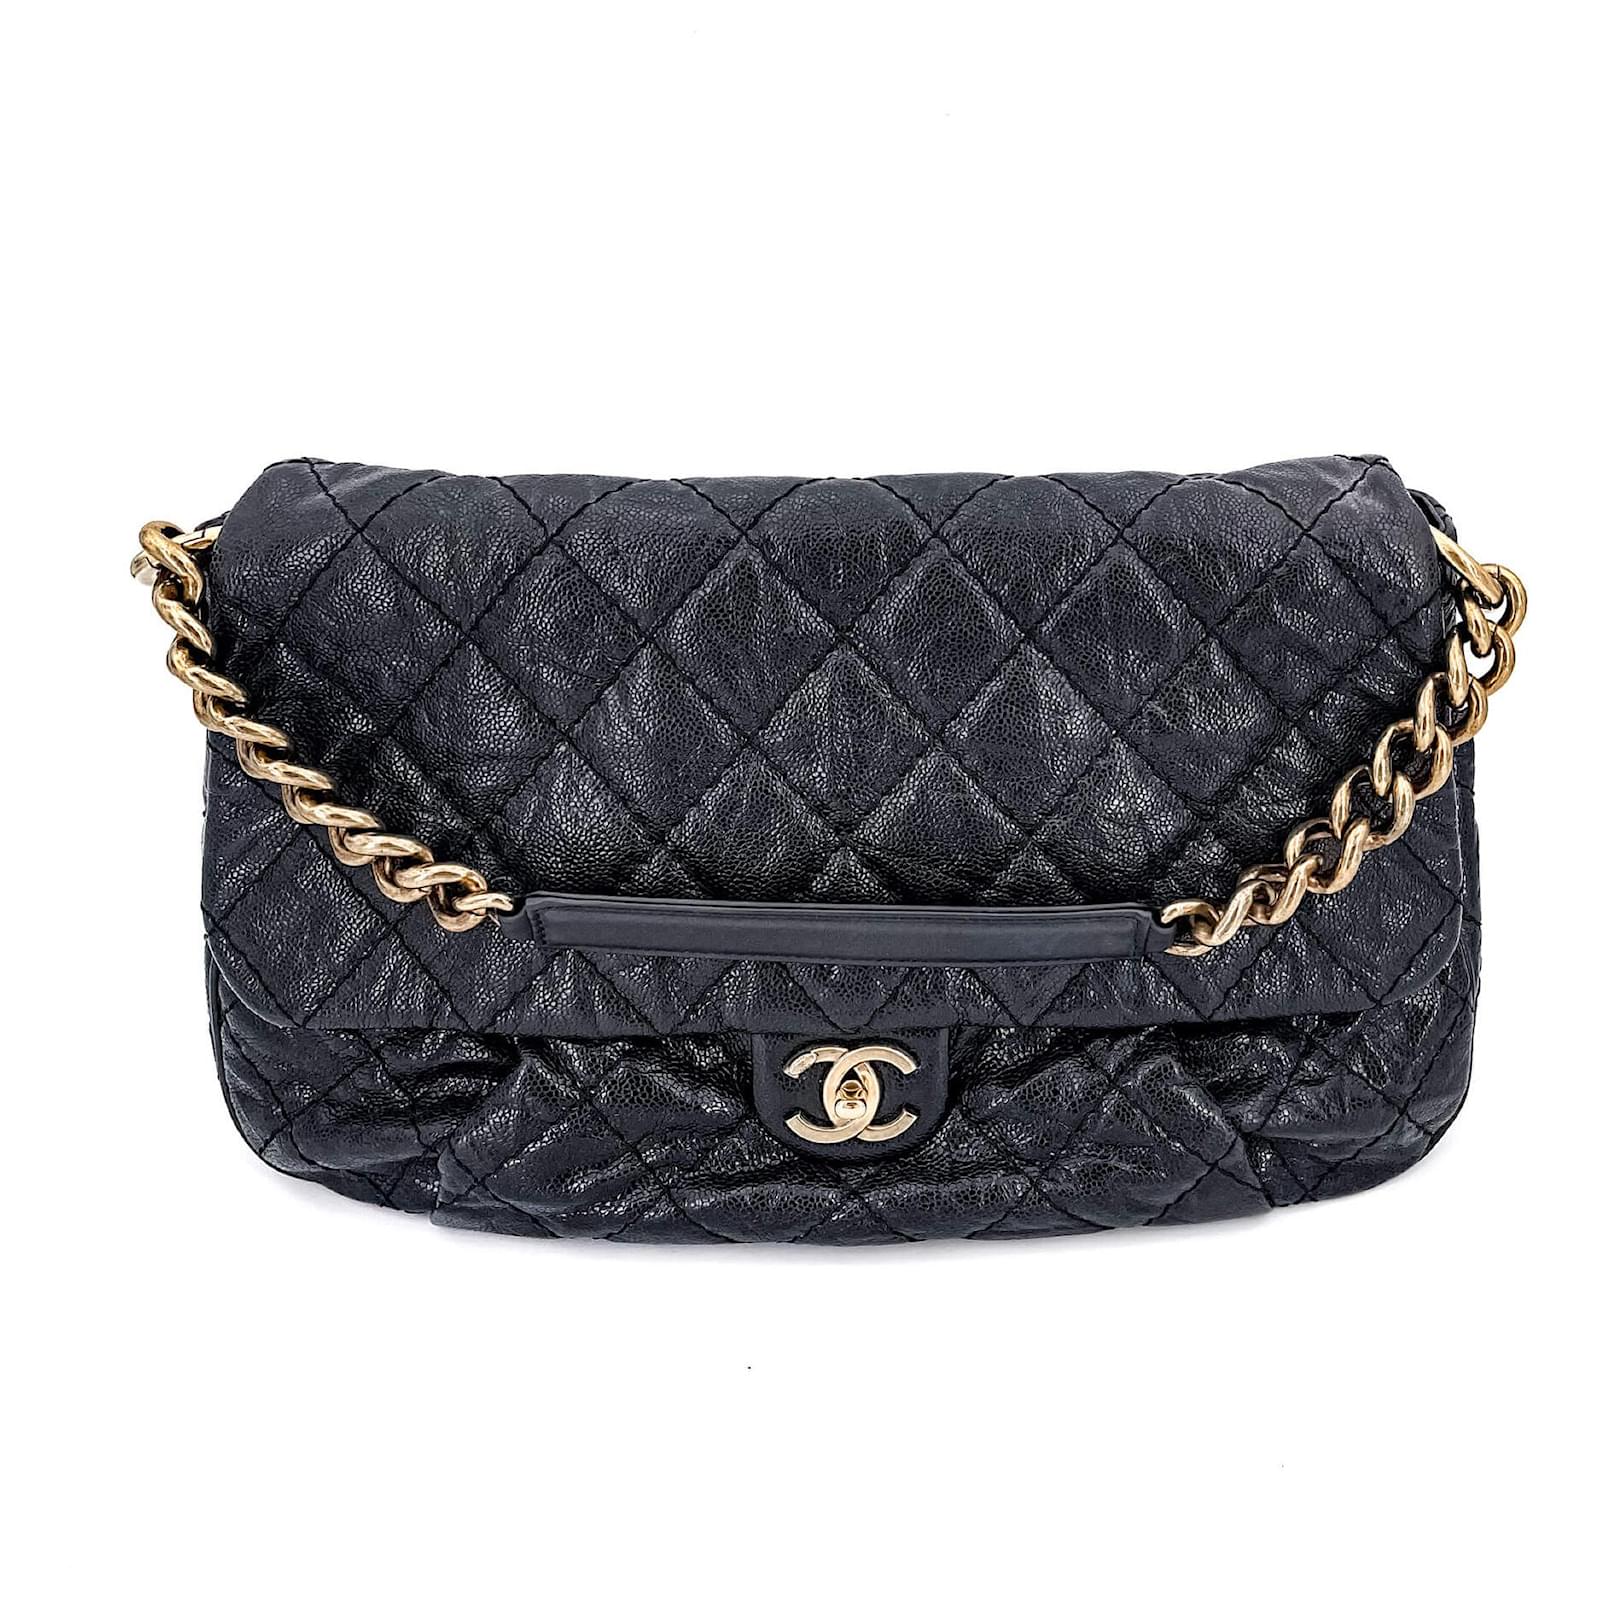 Handbags Chanel Jumbo Distressed Caviar Black Bag